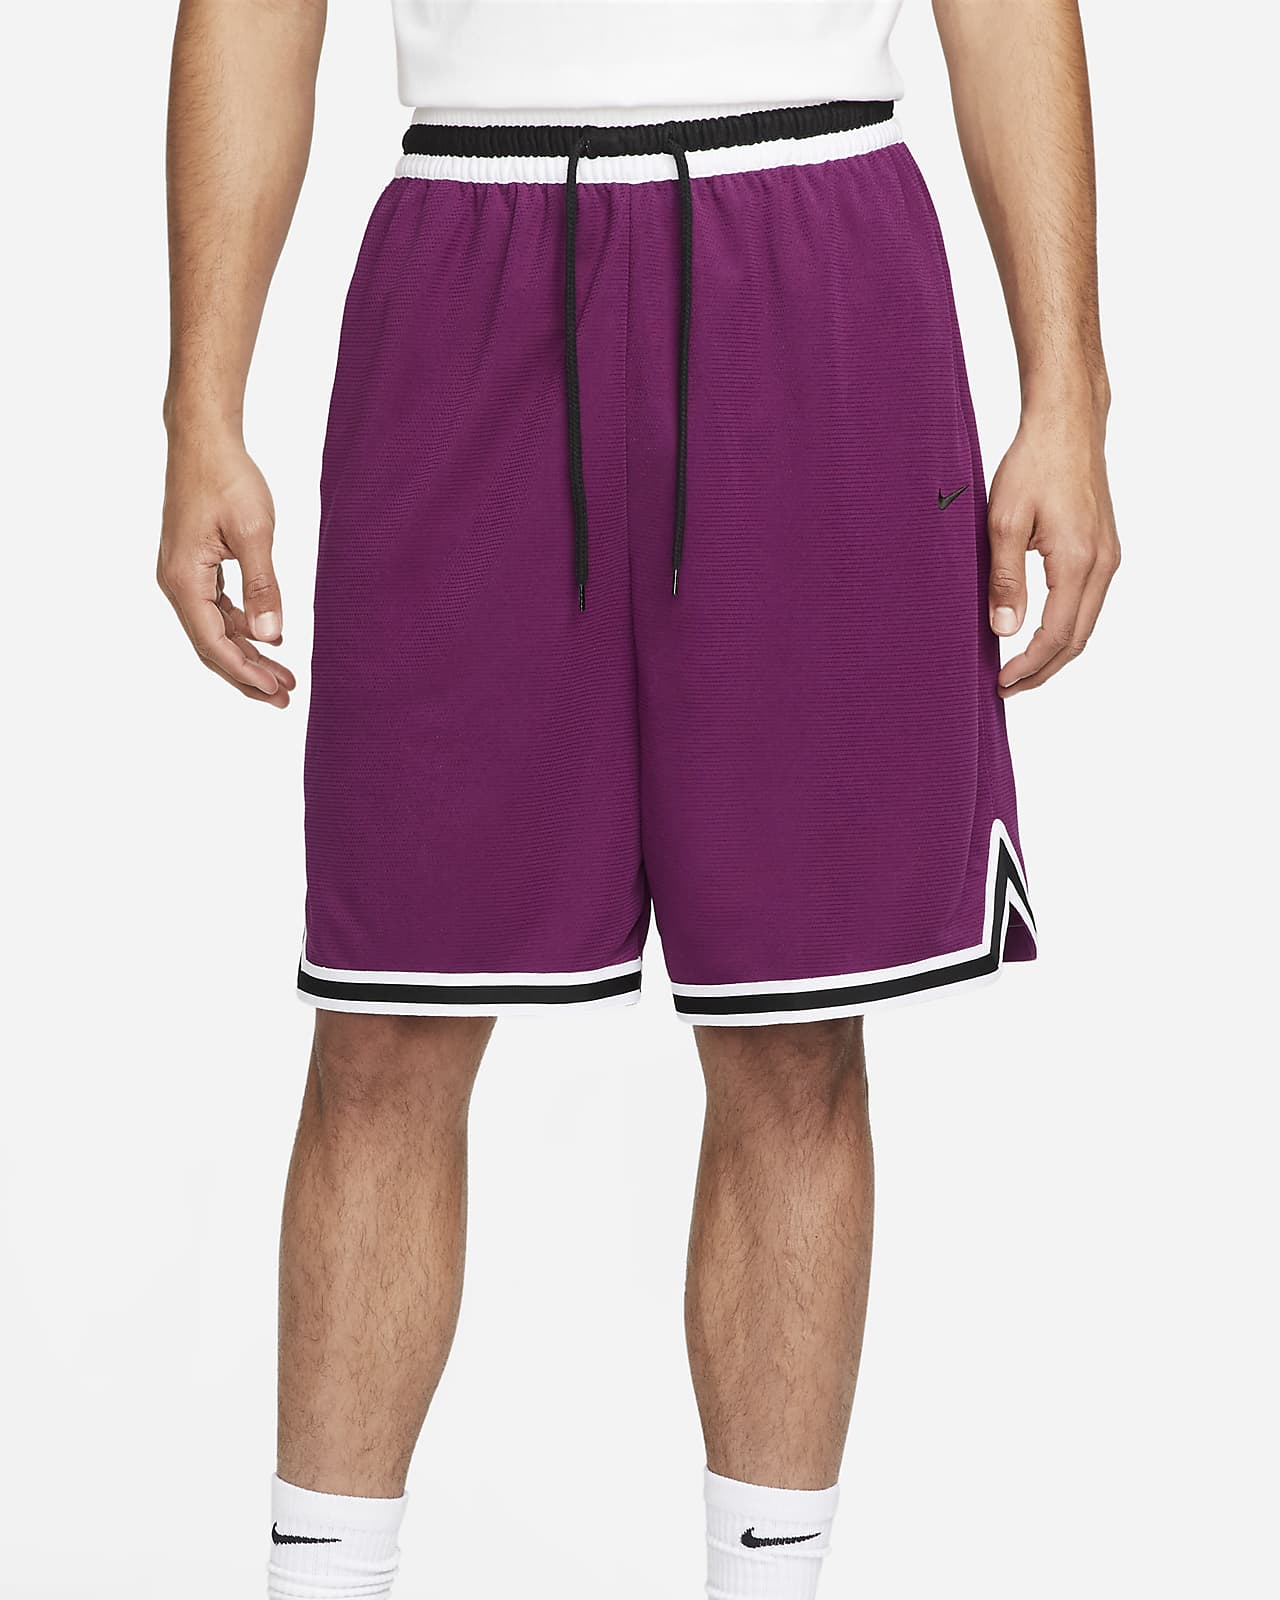 Embroidered Basketball Shorts, Mens Shorts Street Retro